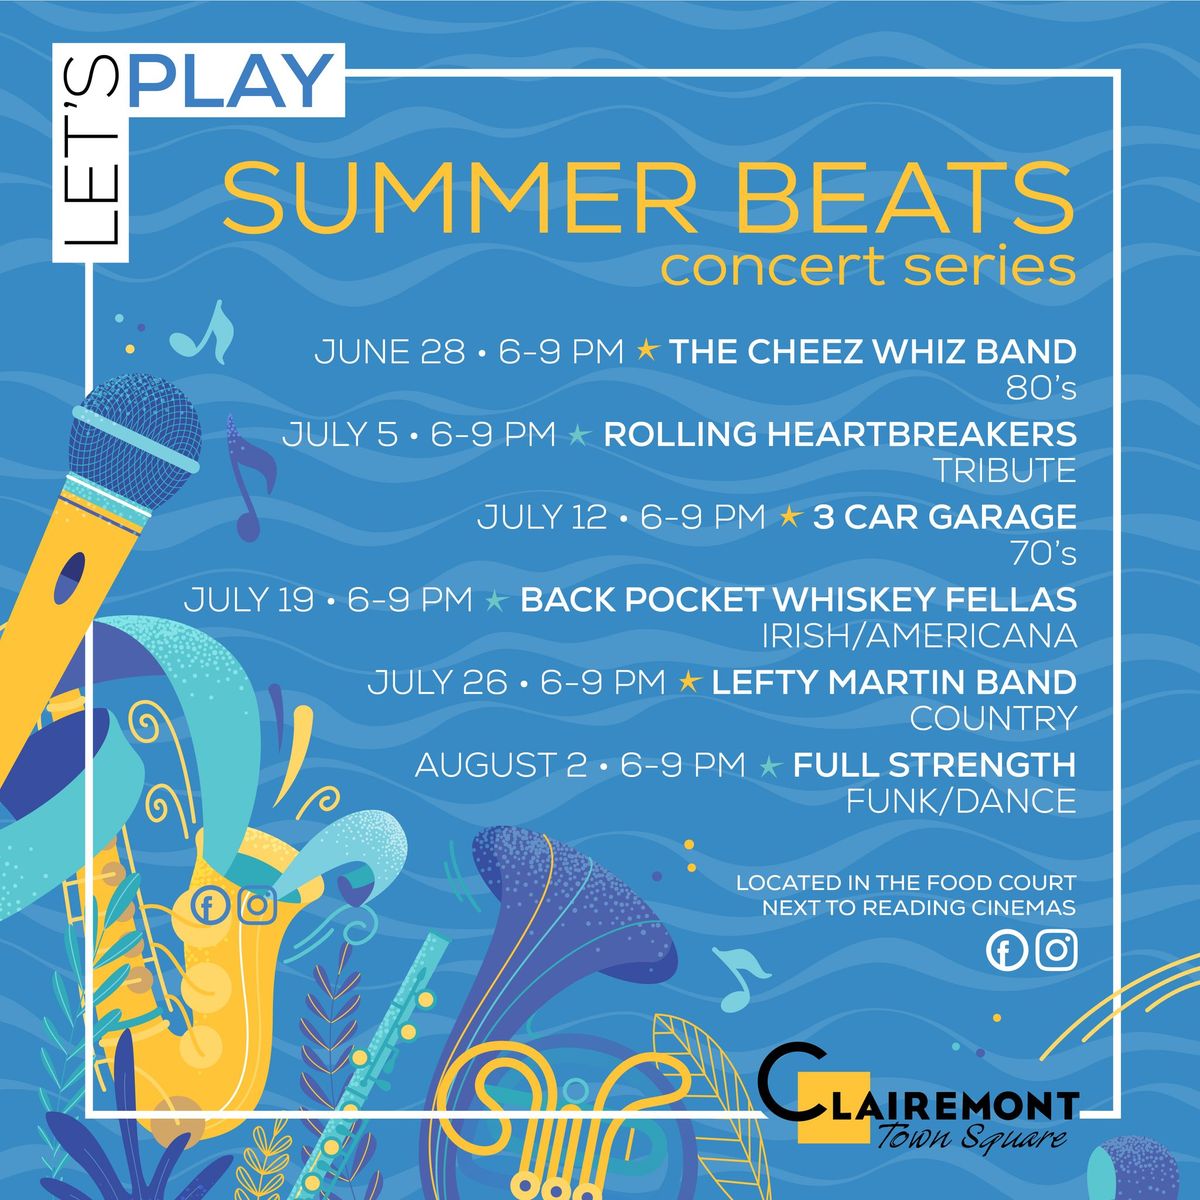 Summer Beats Concert Series - Clairemont Square